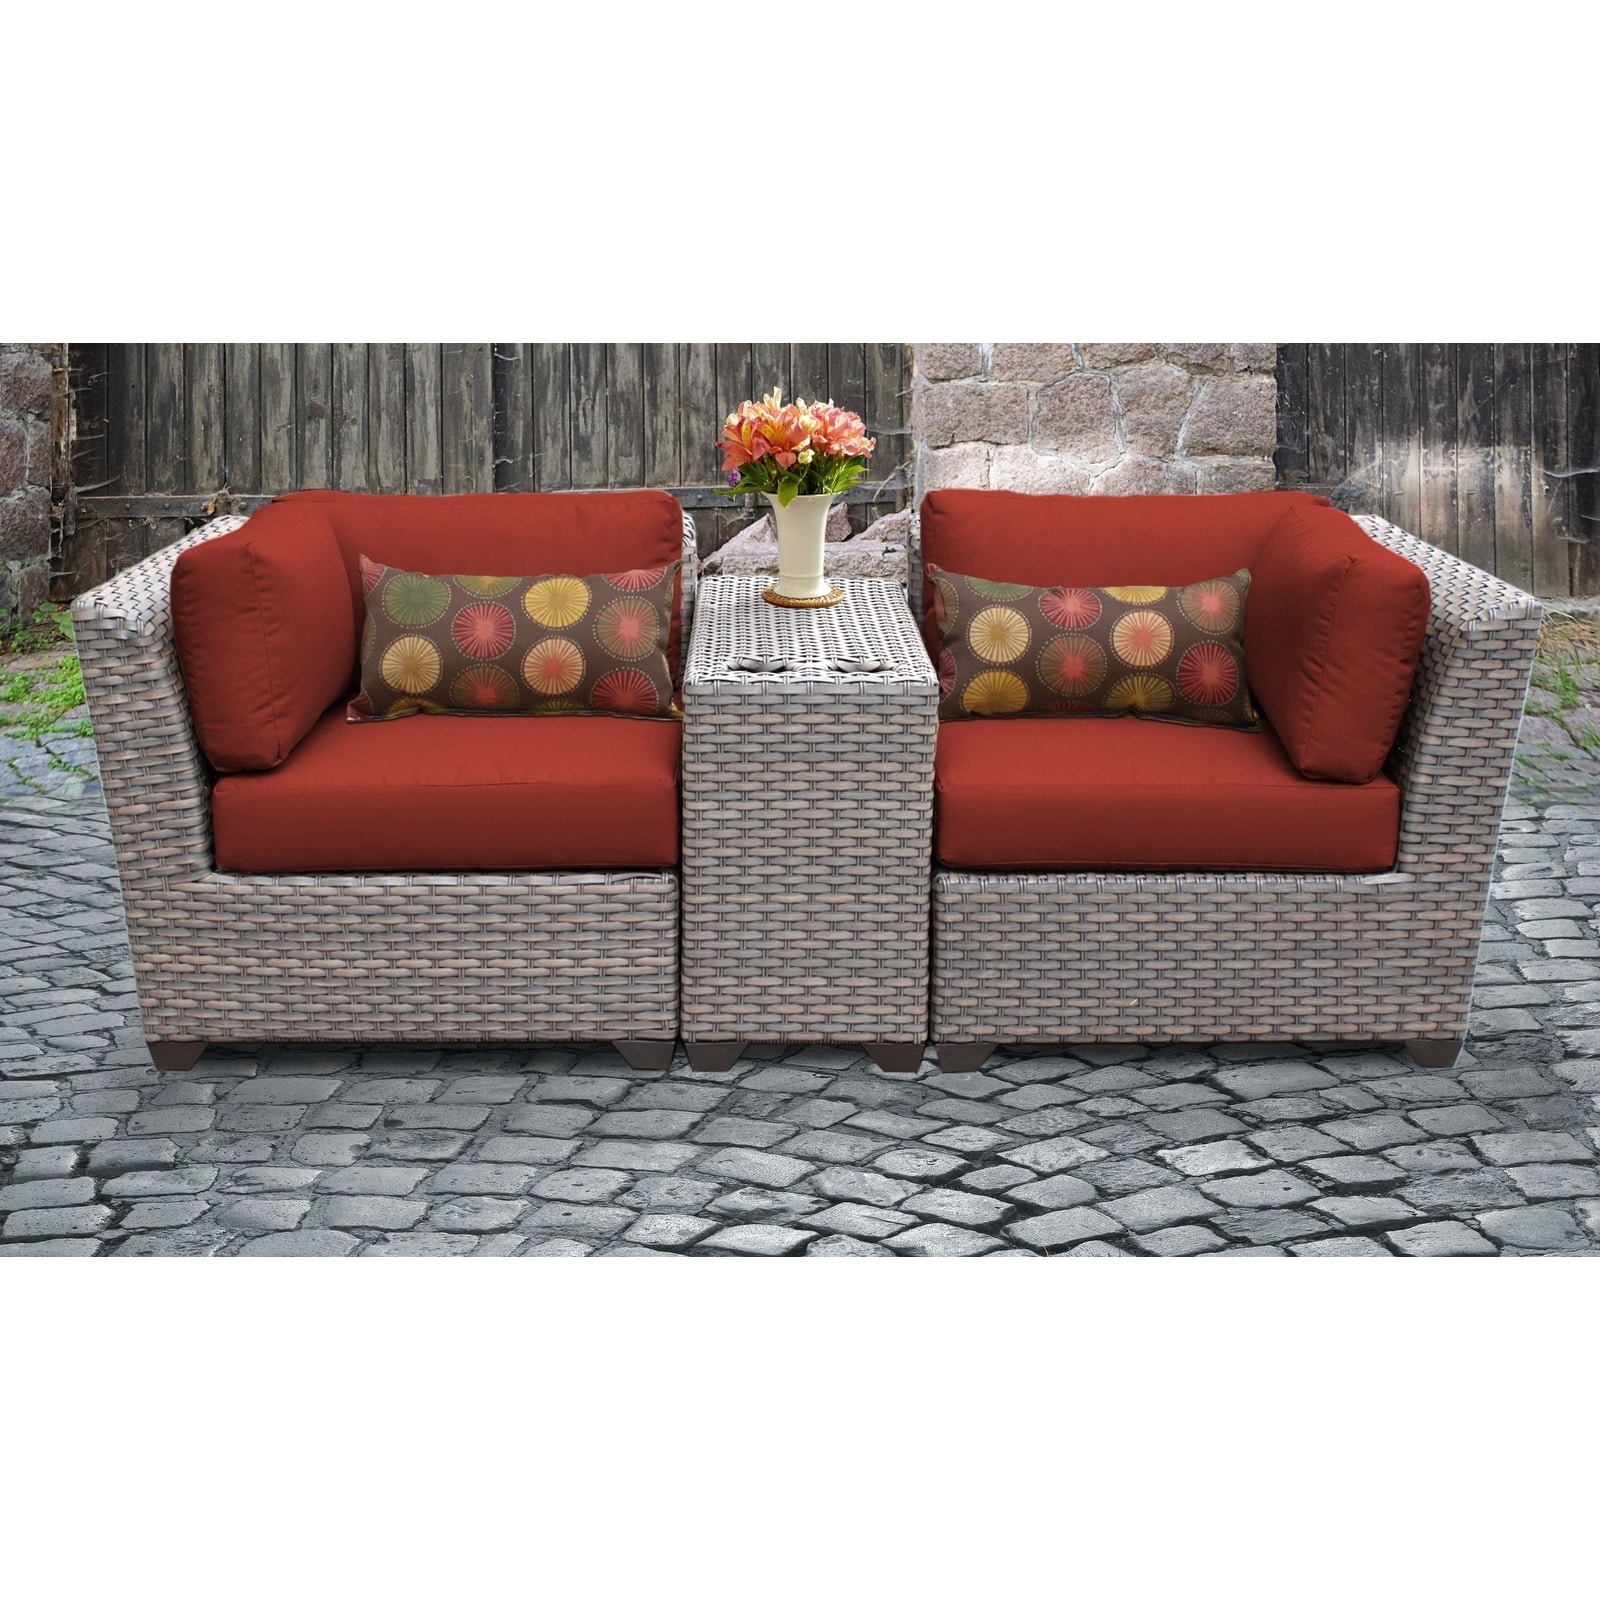 Florence 3 Piece Outdoor Wicker Patio Furniture Set